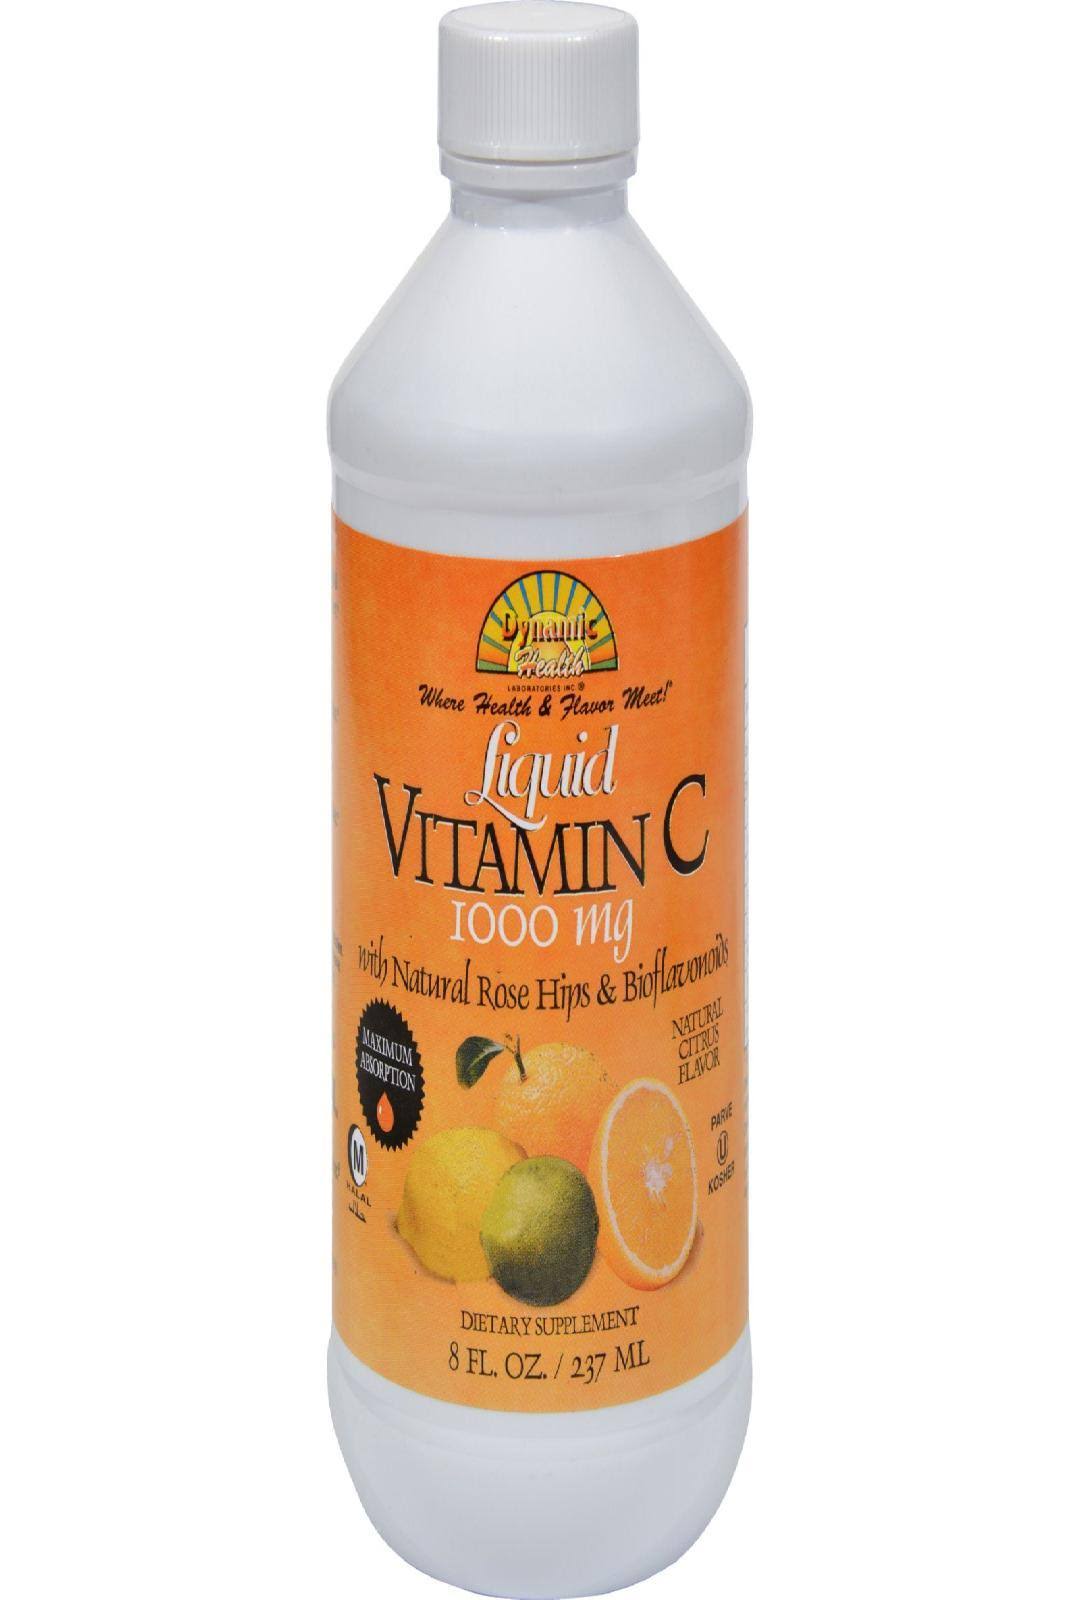 Dynamic Health Liquid Vitamin C - 1000mg